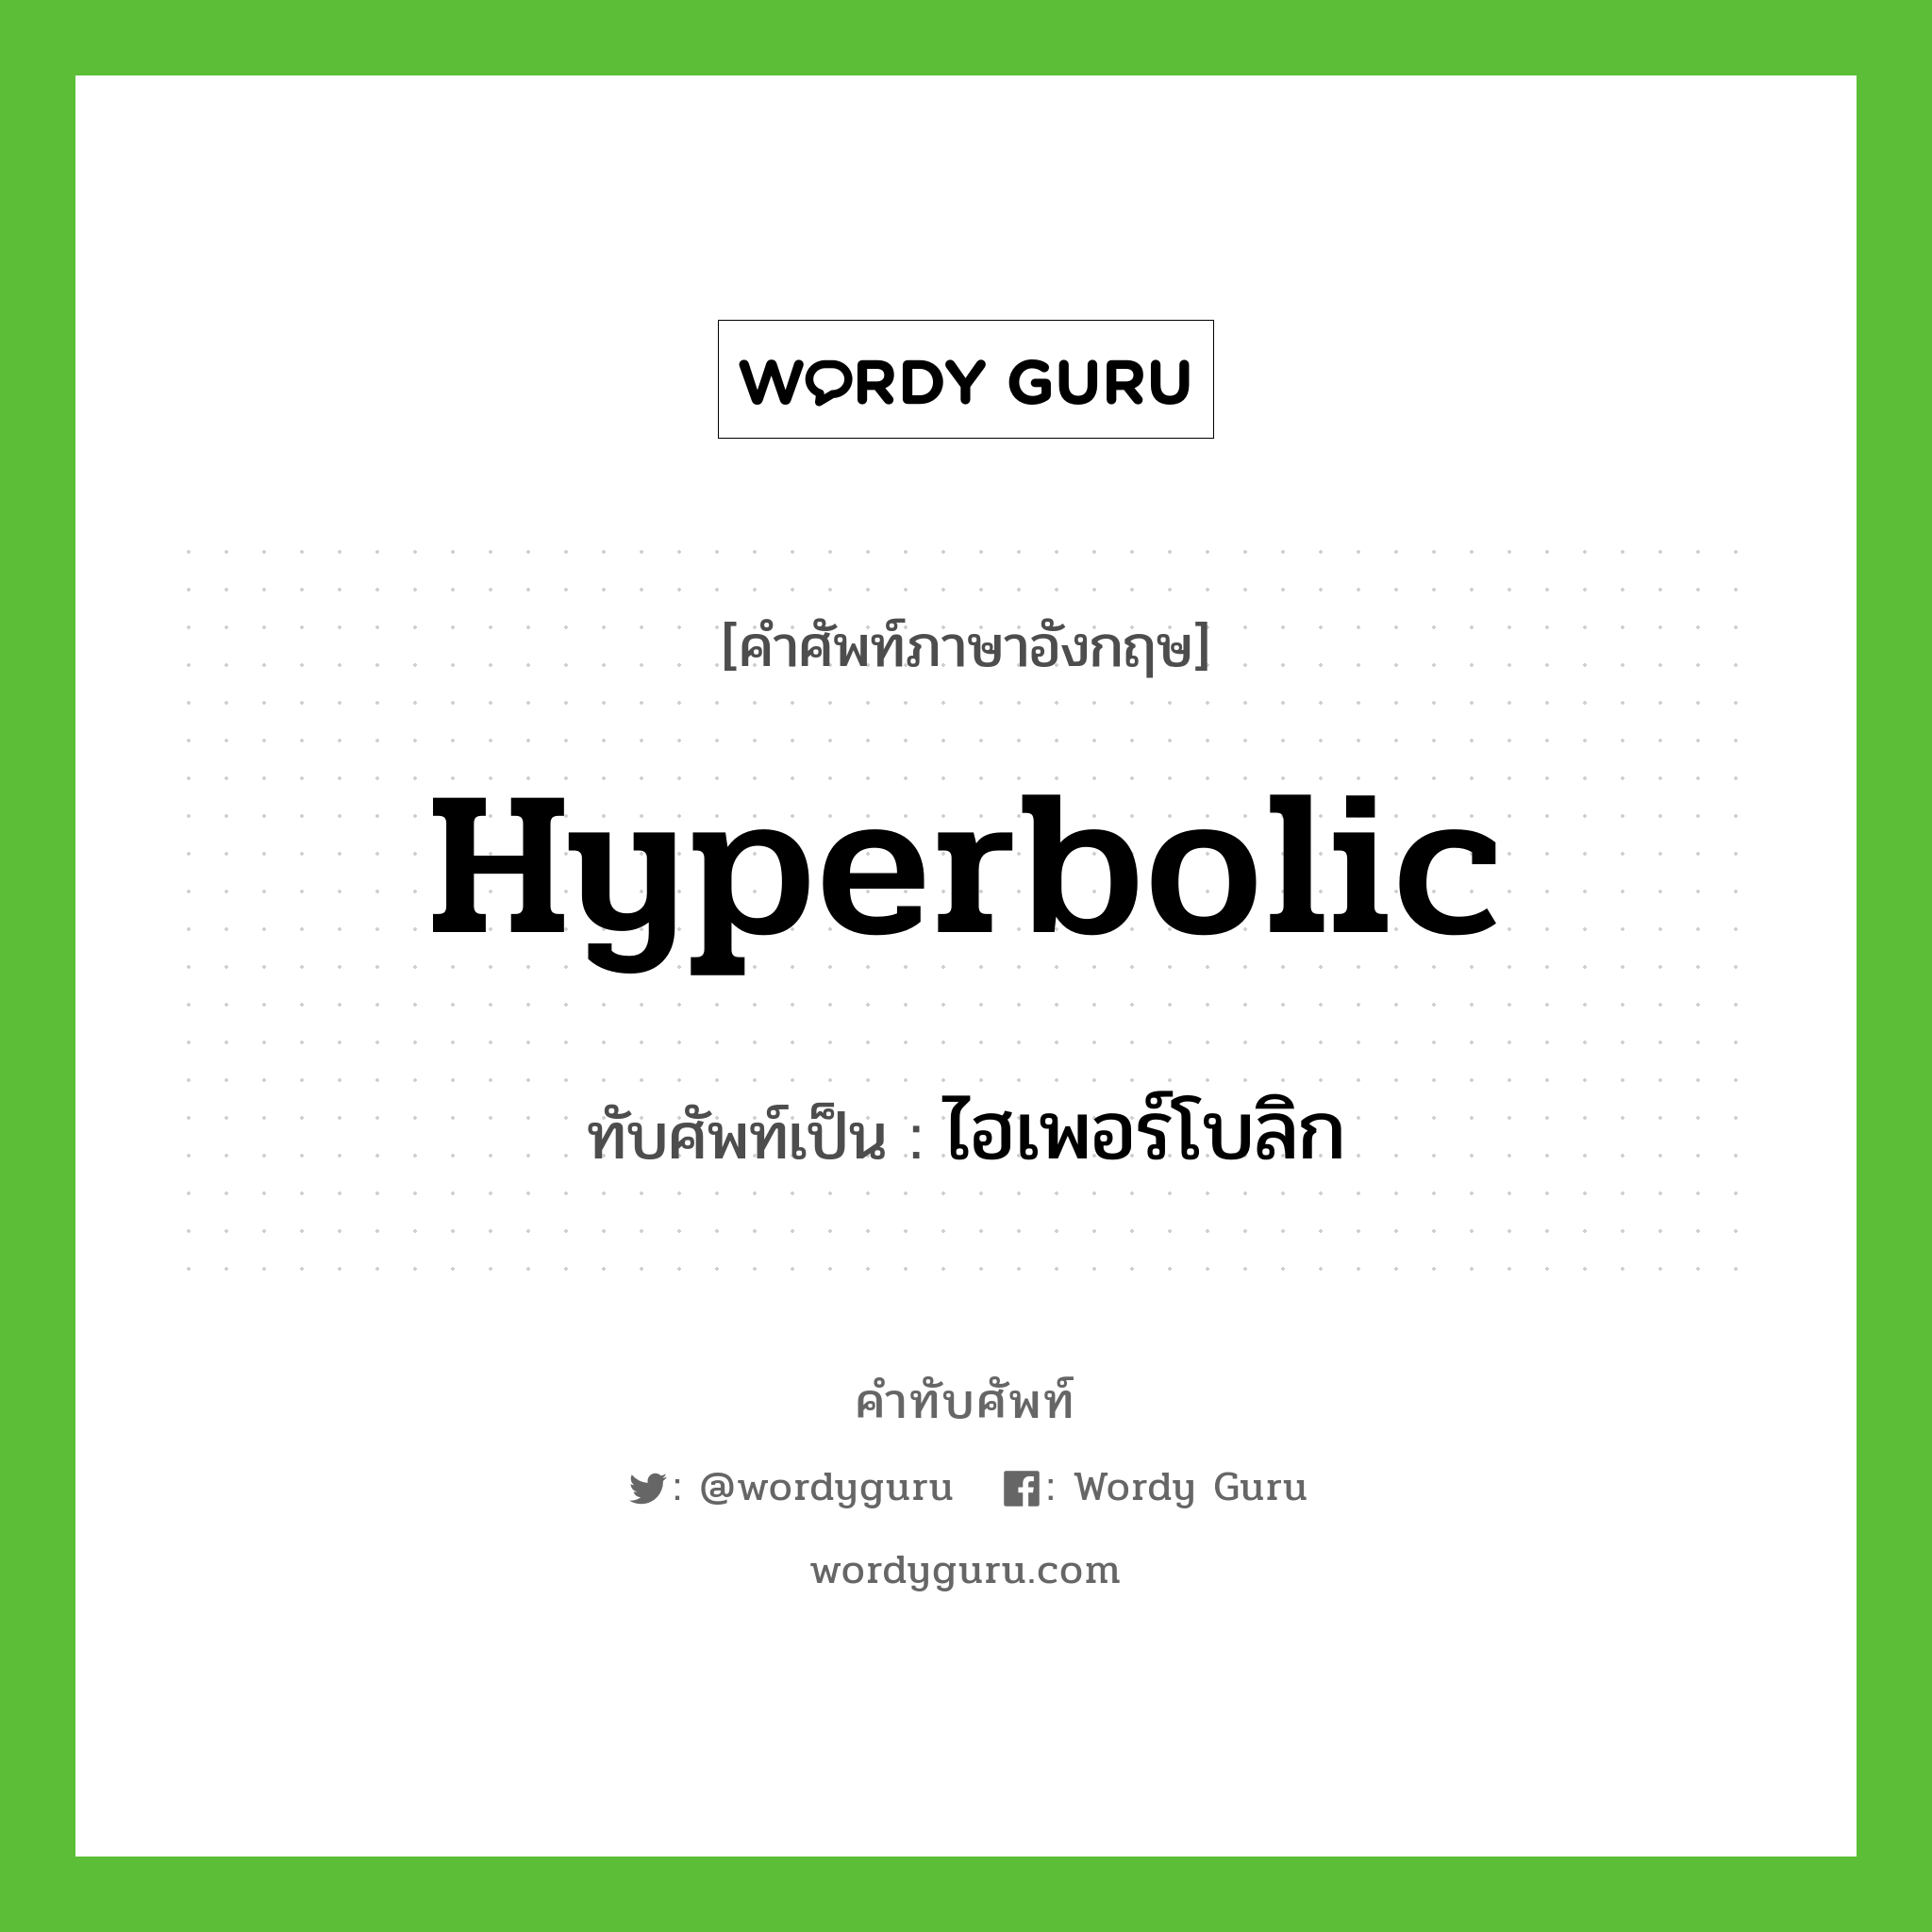 hyperbolic เขียนเป็นคำไทยว่าอะไร?, คำศัพท์ภาษาอังกฤษ hyperbolic ทับศัพท์เป็น ไฮเพอร์โบลิก